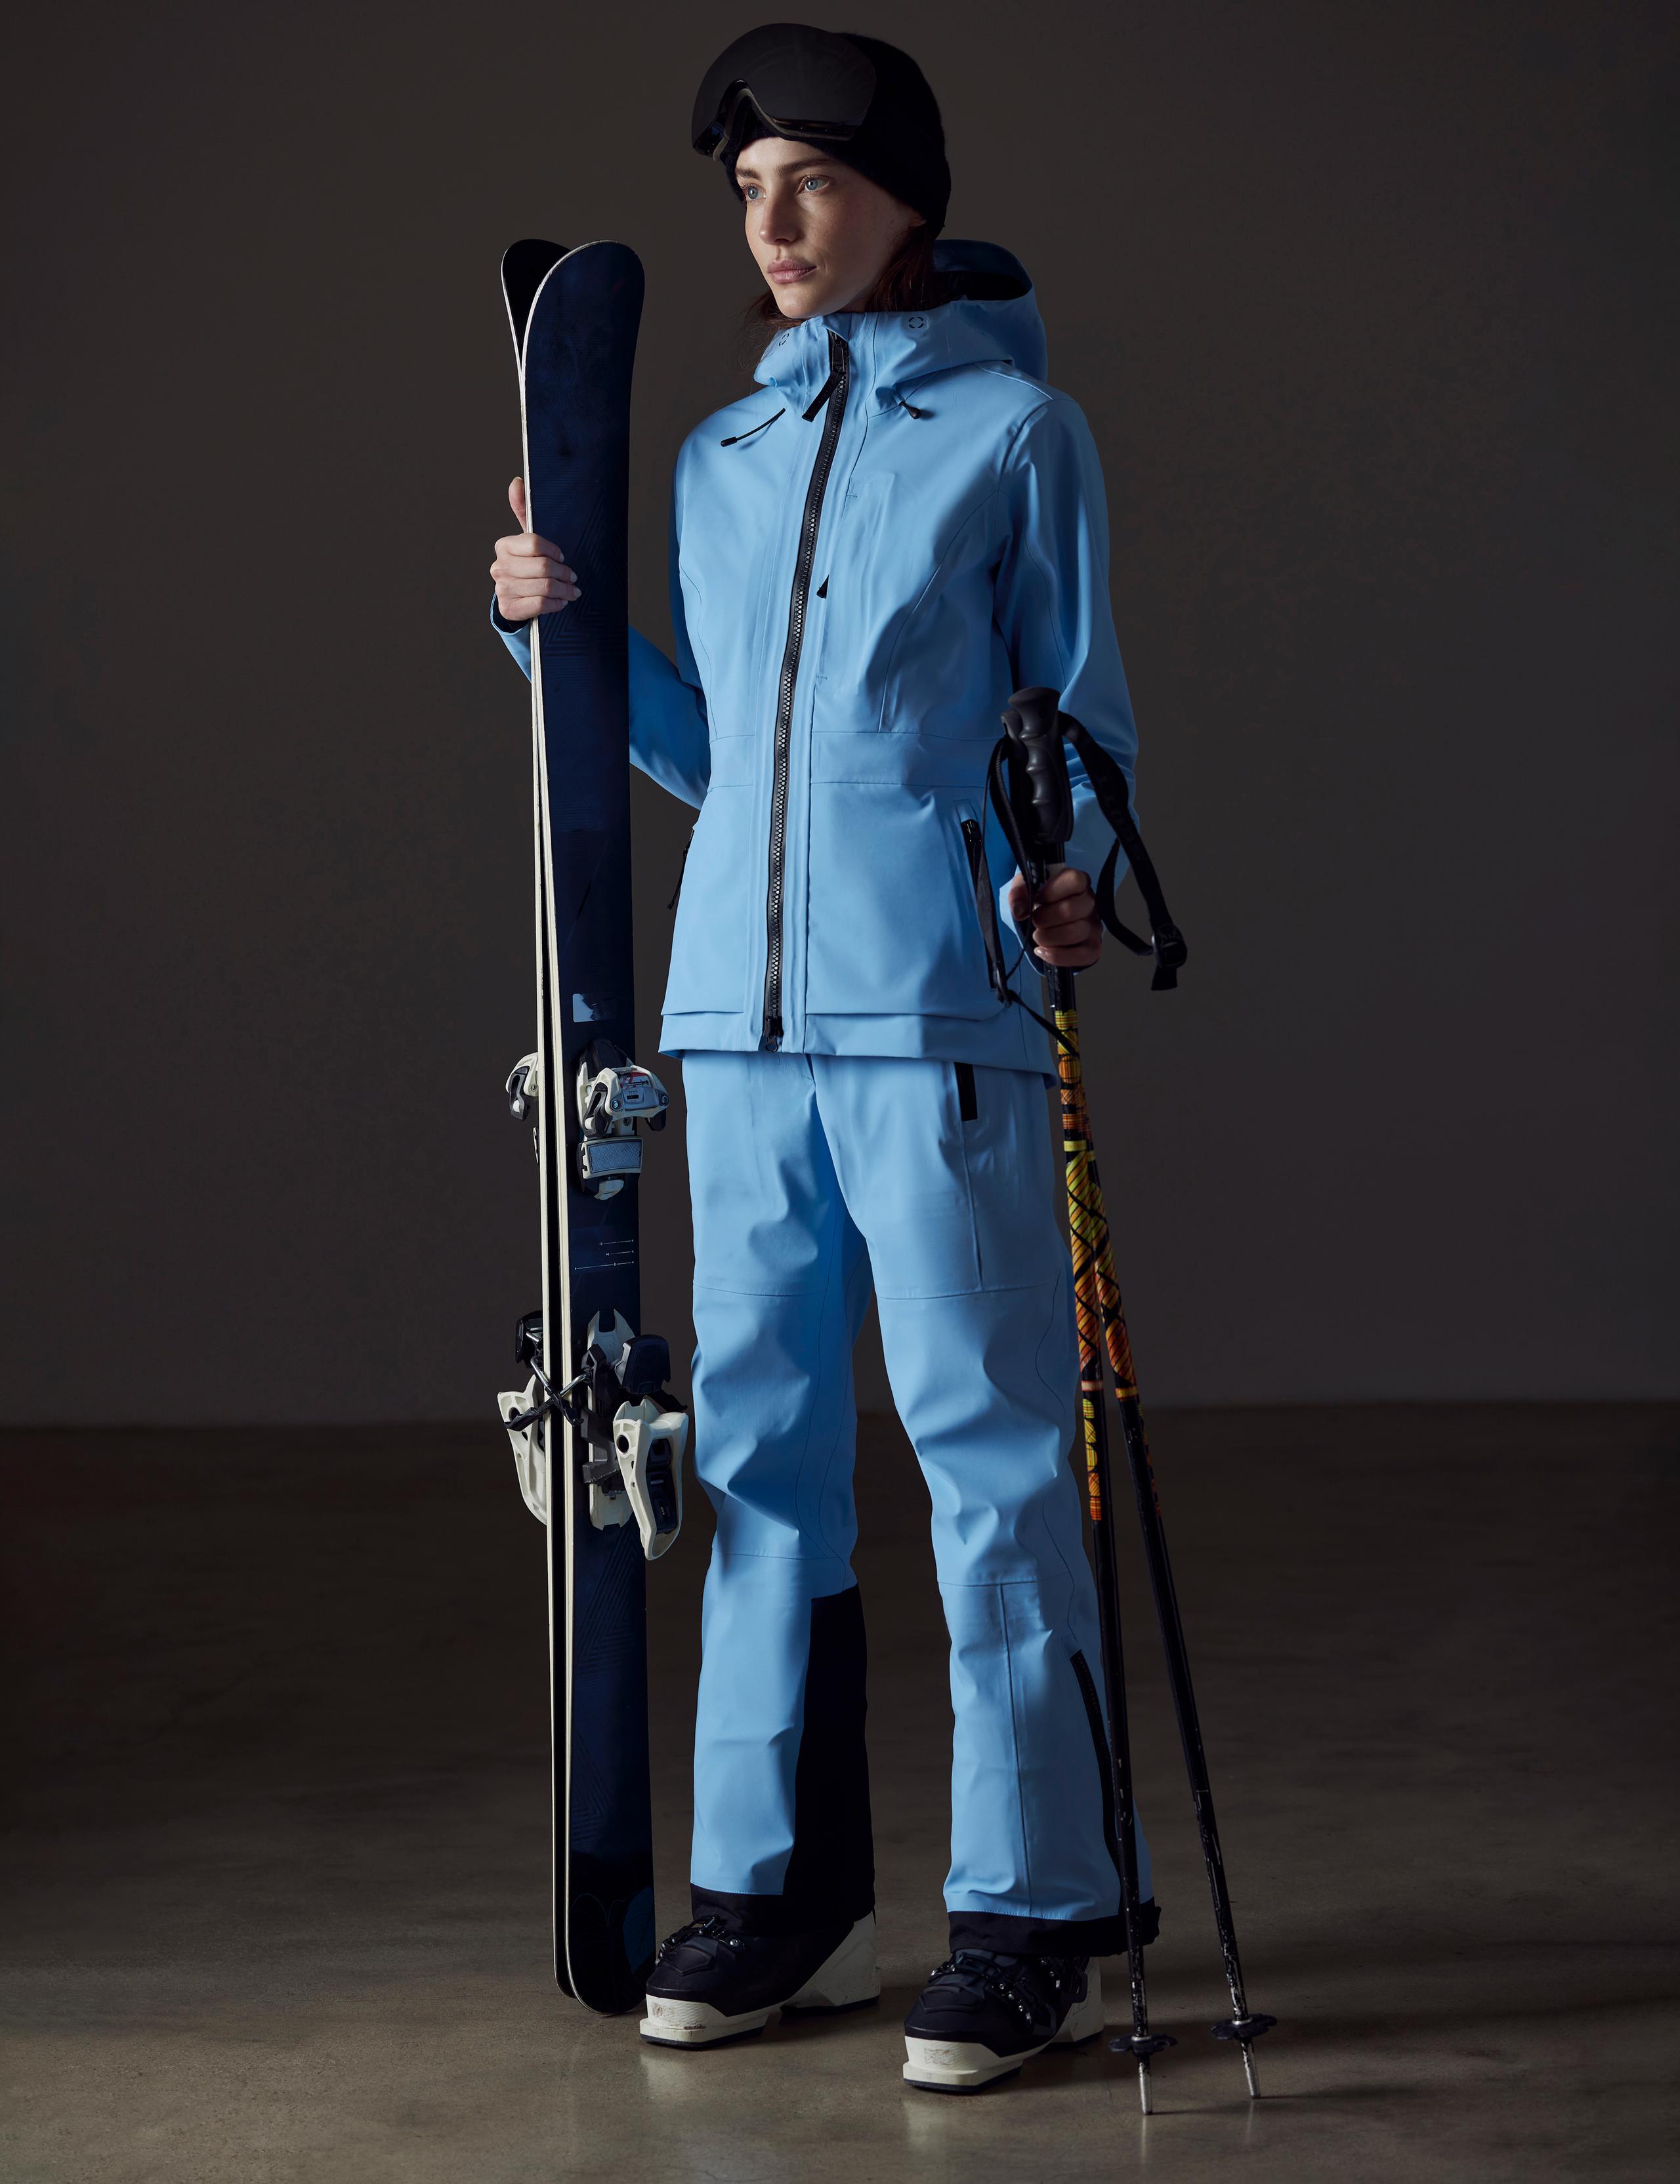 A woman in Boyd Ski Jacket holding skis